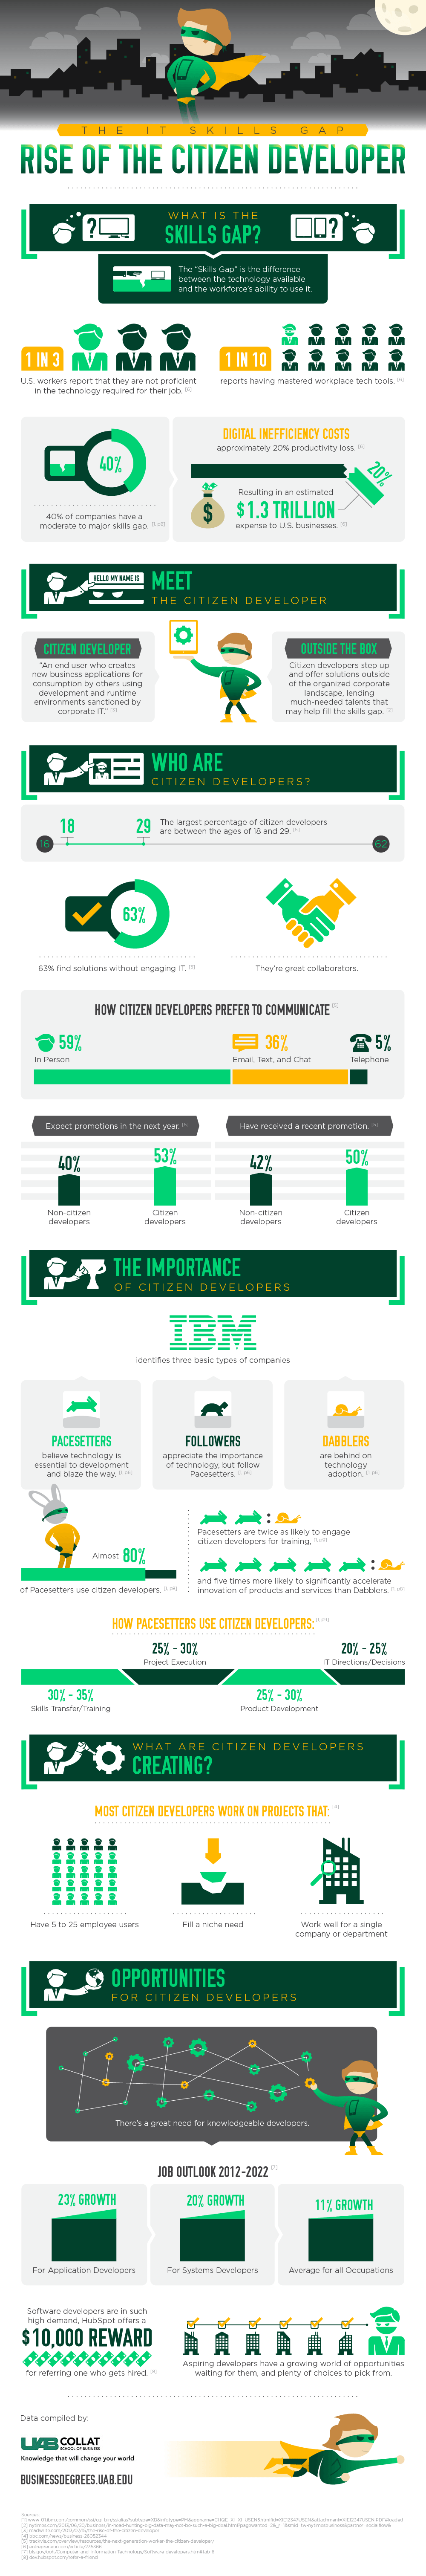 The IT Skills Gap Infographic